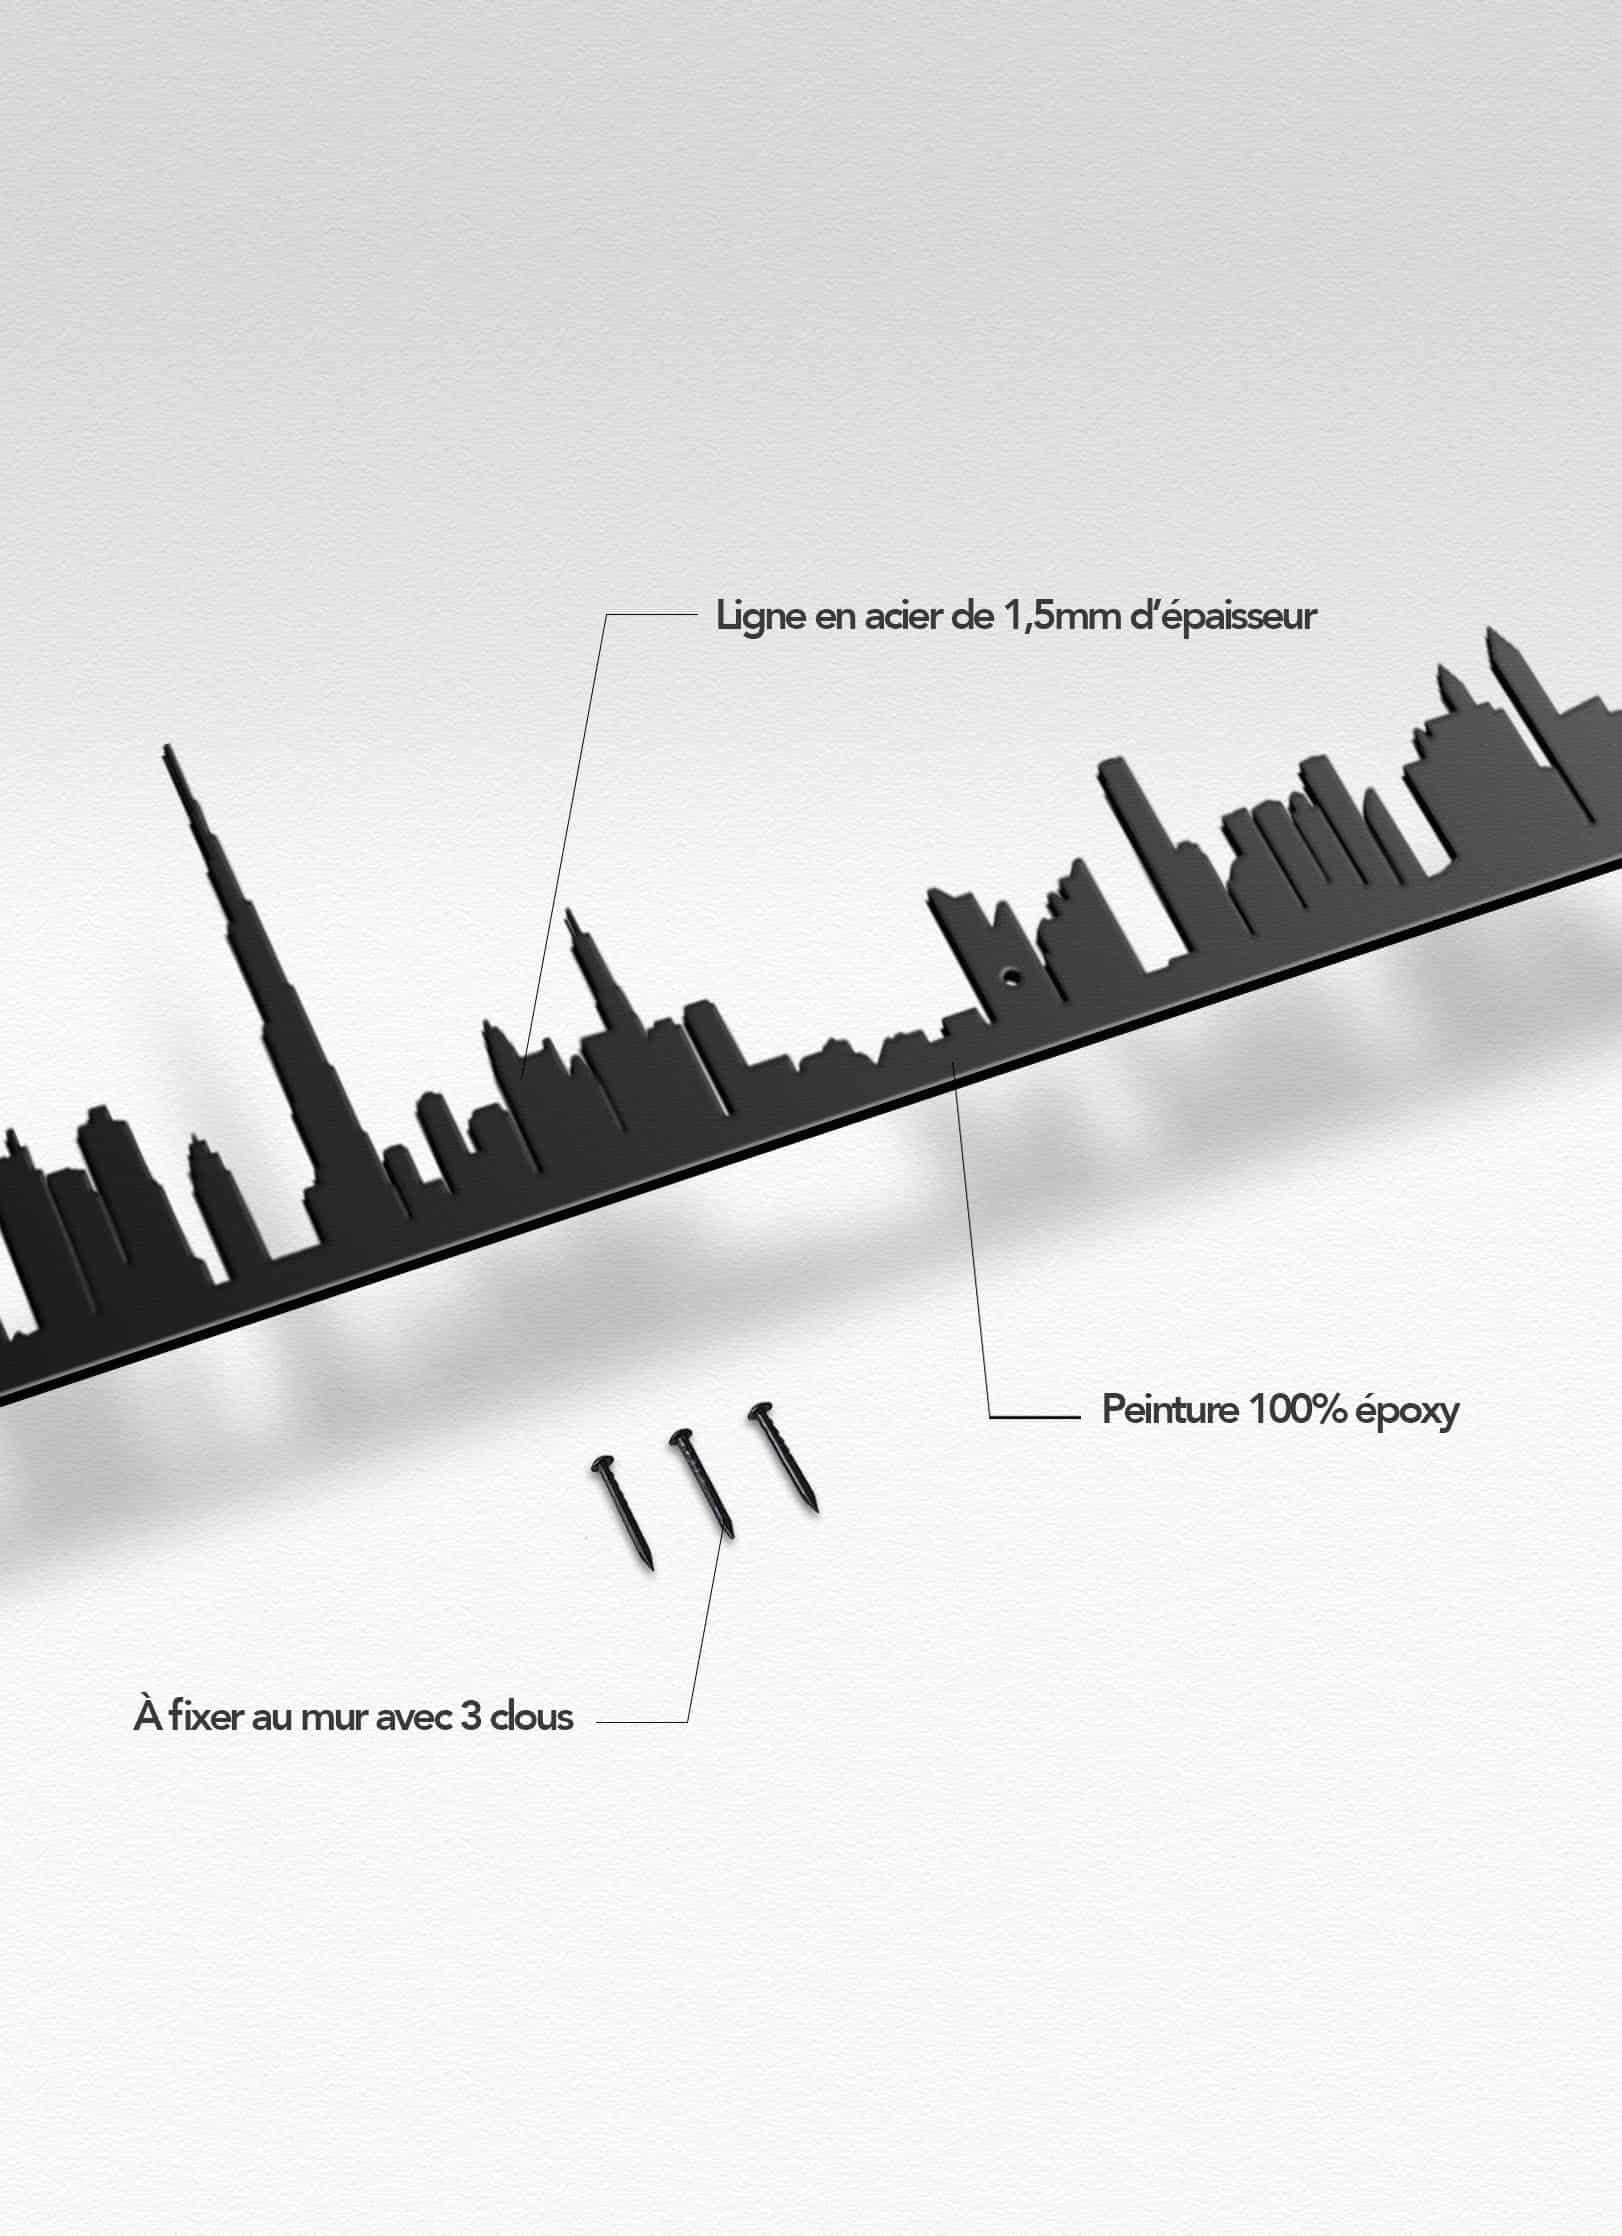 Presentation of the skyline of Dubai